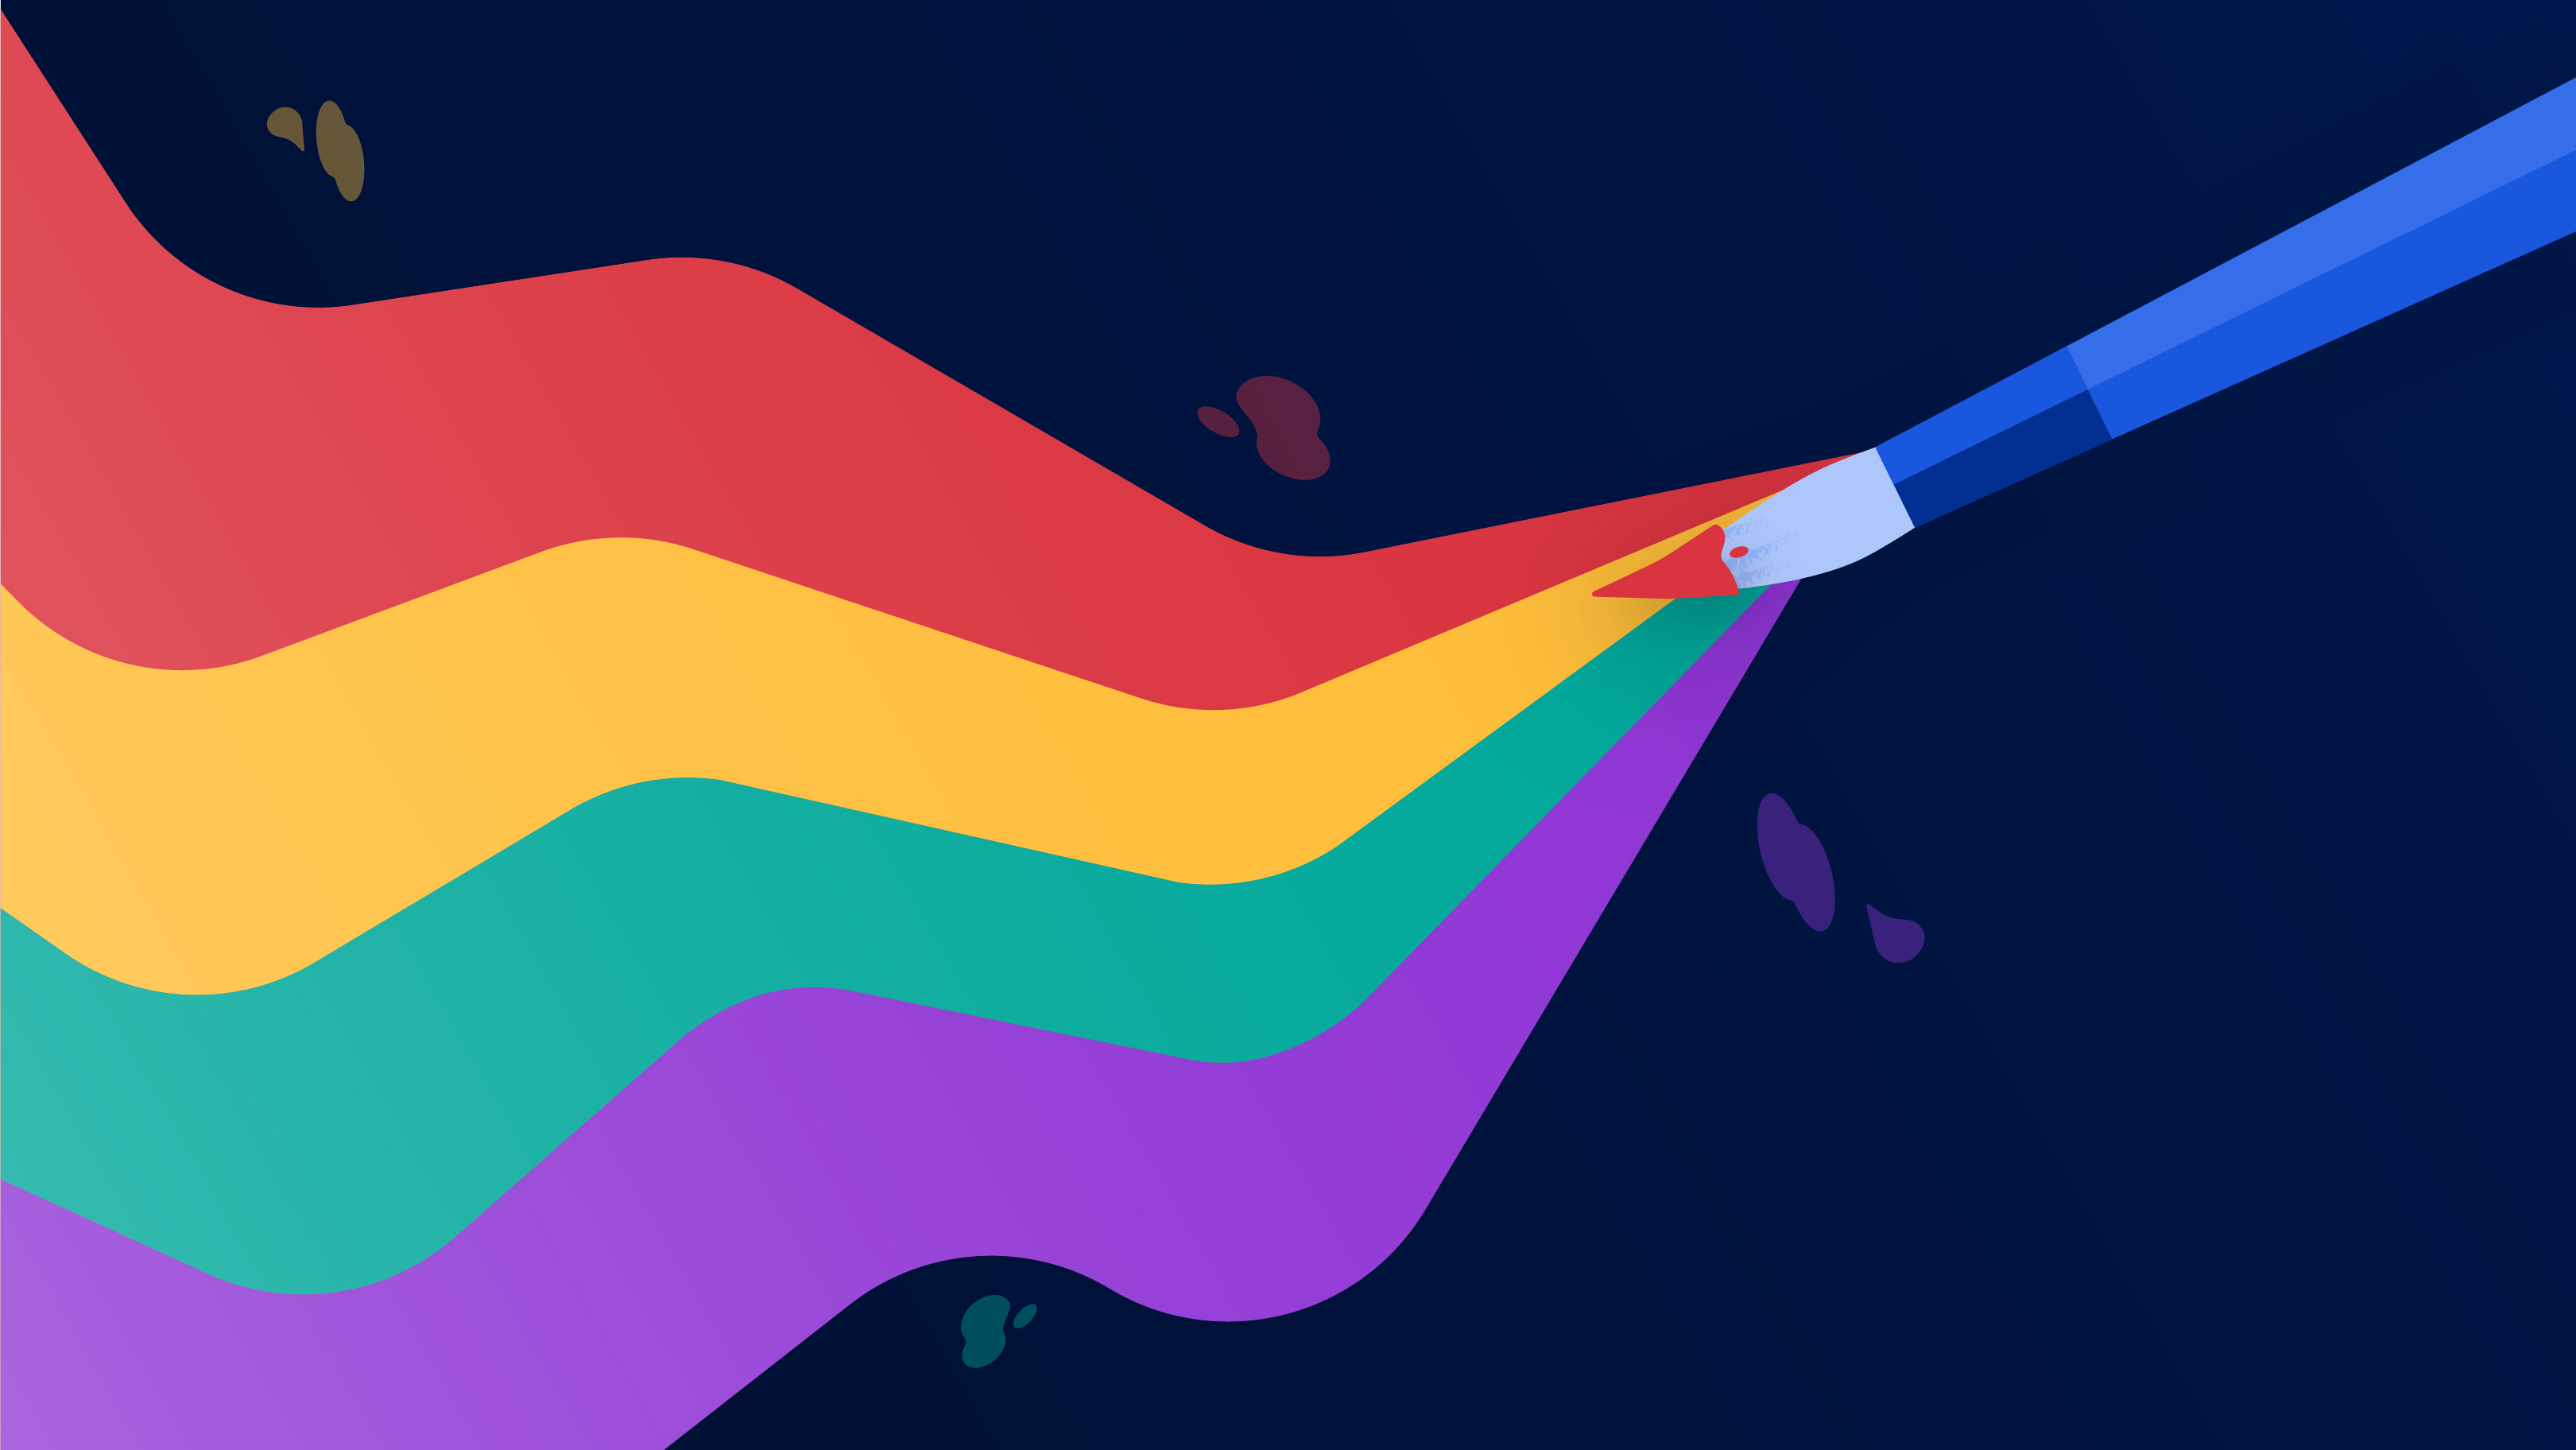 Paintbrush moving across image creating a rainbow of paint to symbolize creativity